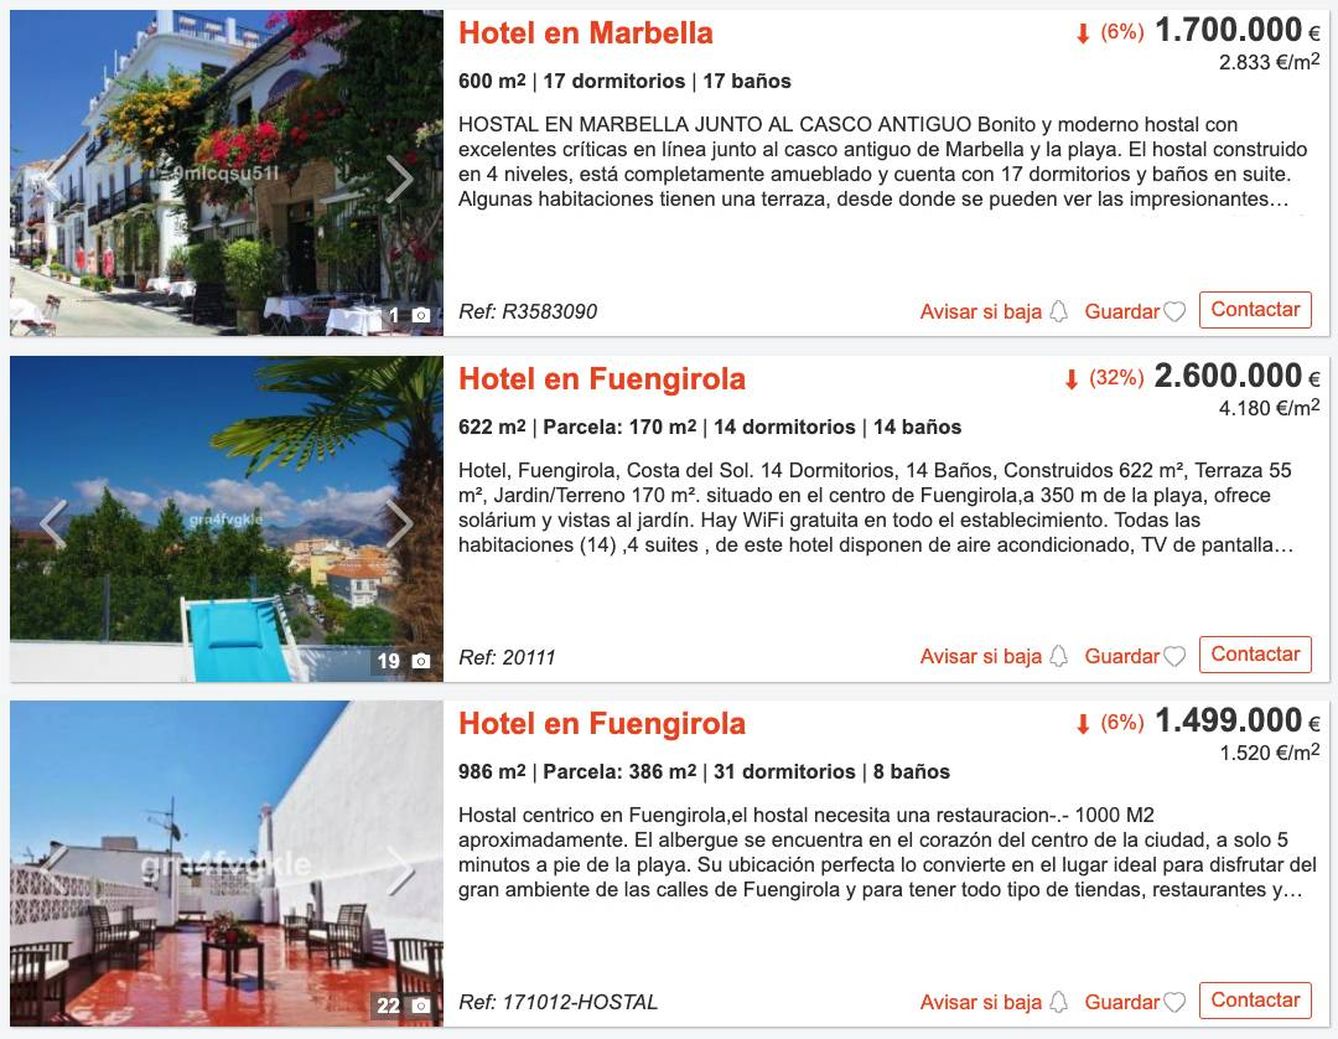 Ofertas de hoteles en el portal Spainhouses.net.